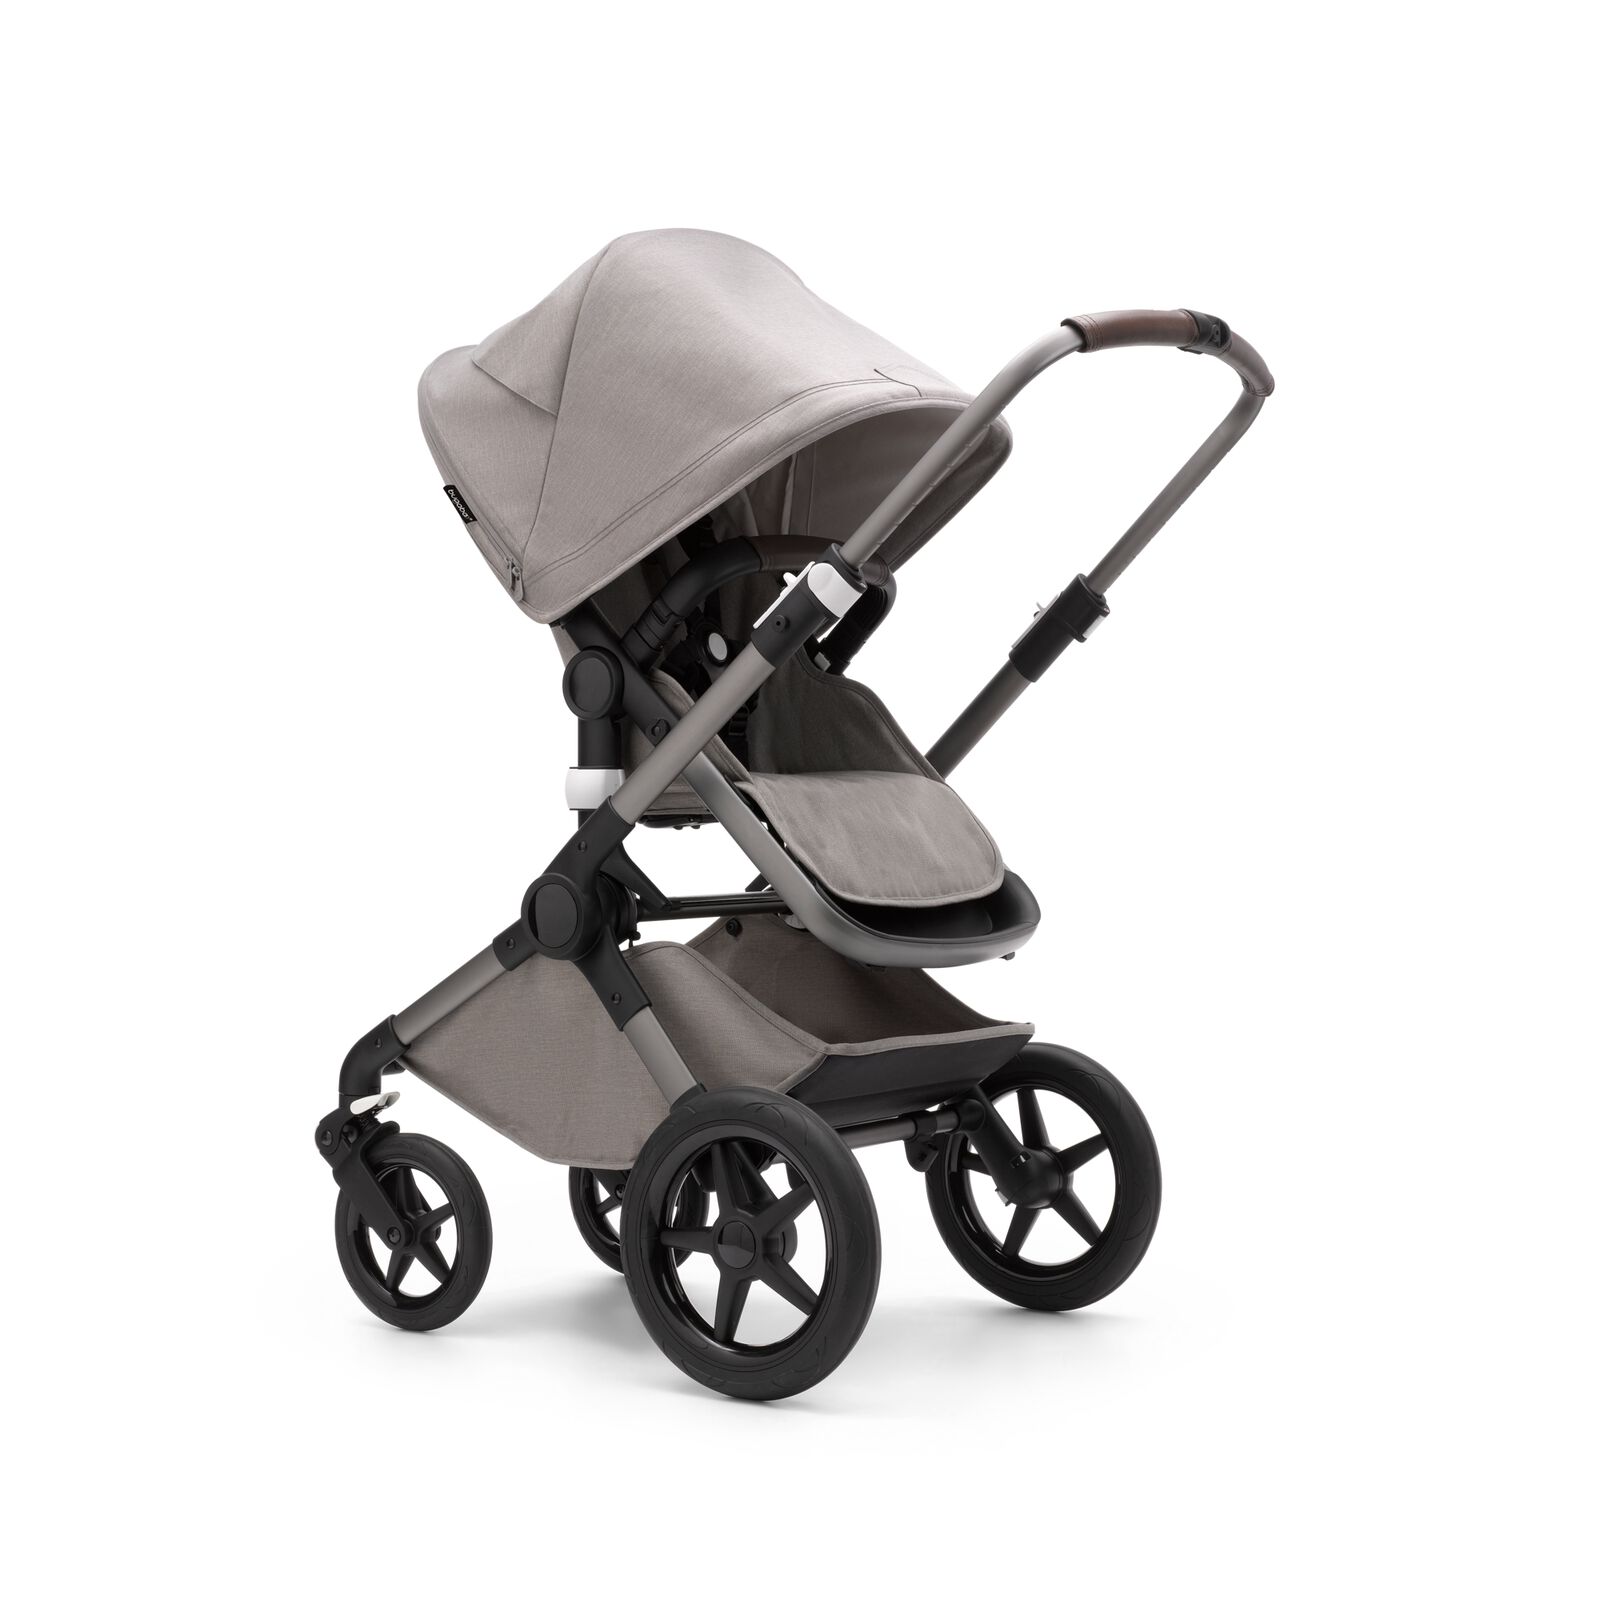 Bugaboo Fox 3 seat stroller with graphite frame, light grey fabrics and light grey sun canopy.